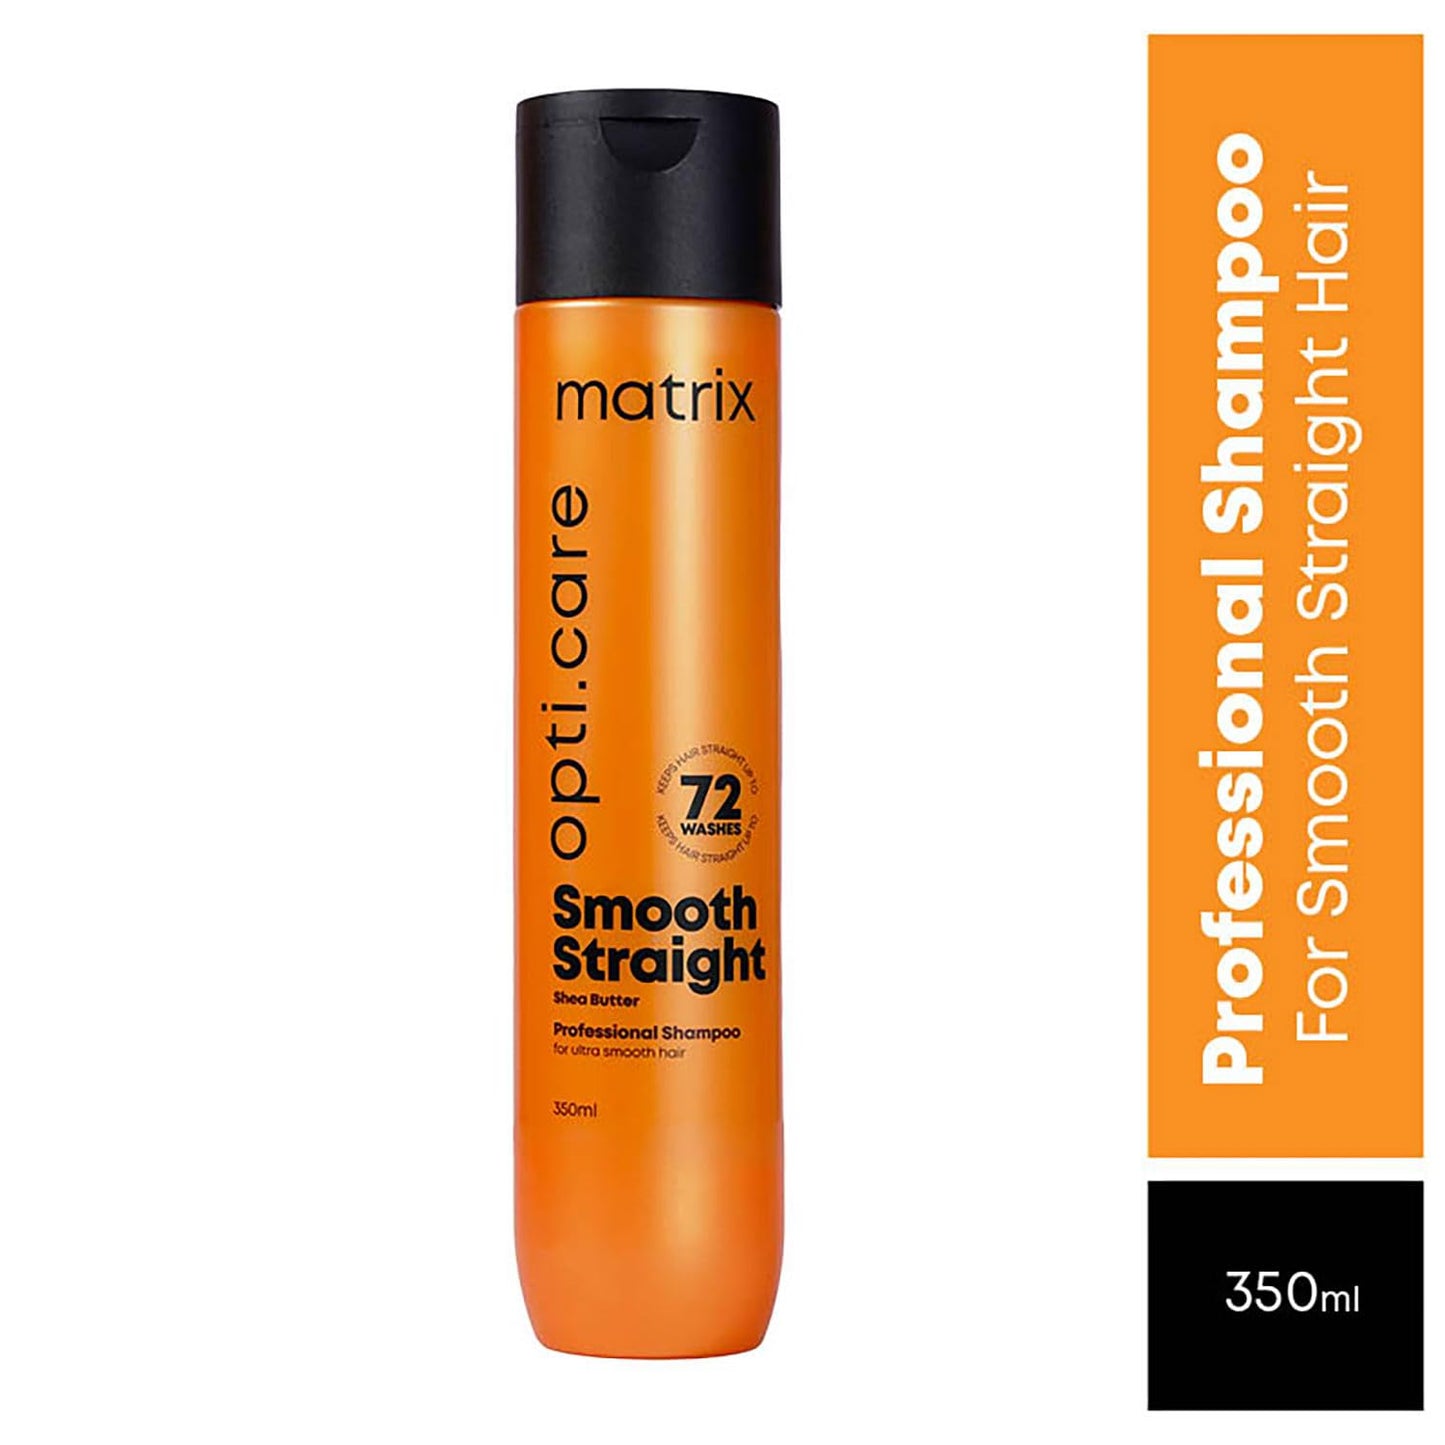 Matrix Opti Care Smooth Straight Professional Shampoo 350ML